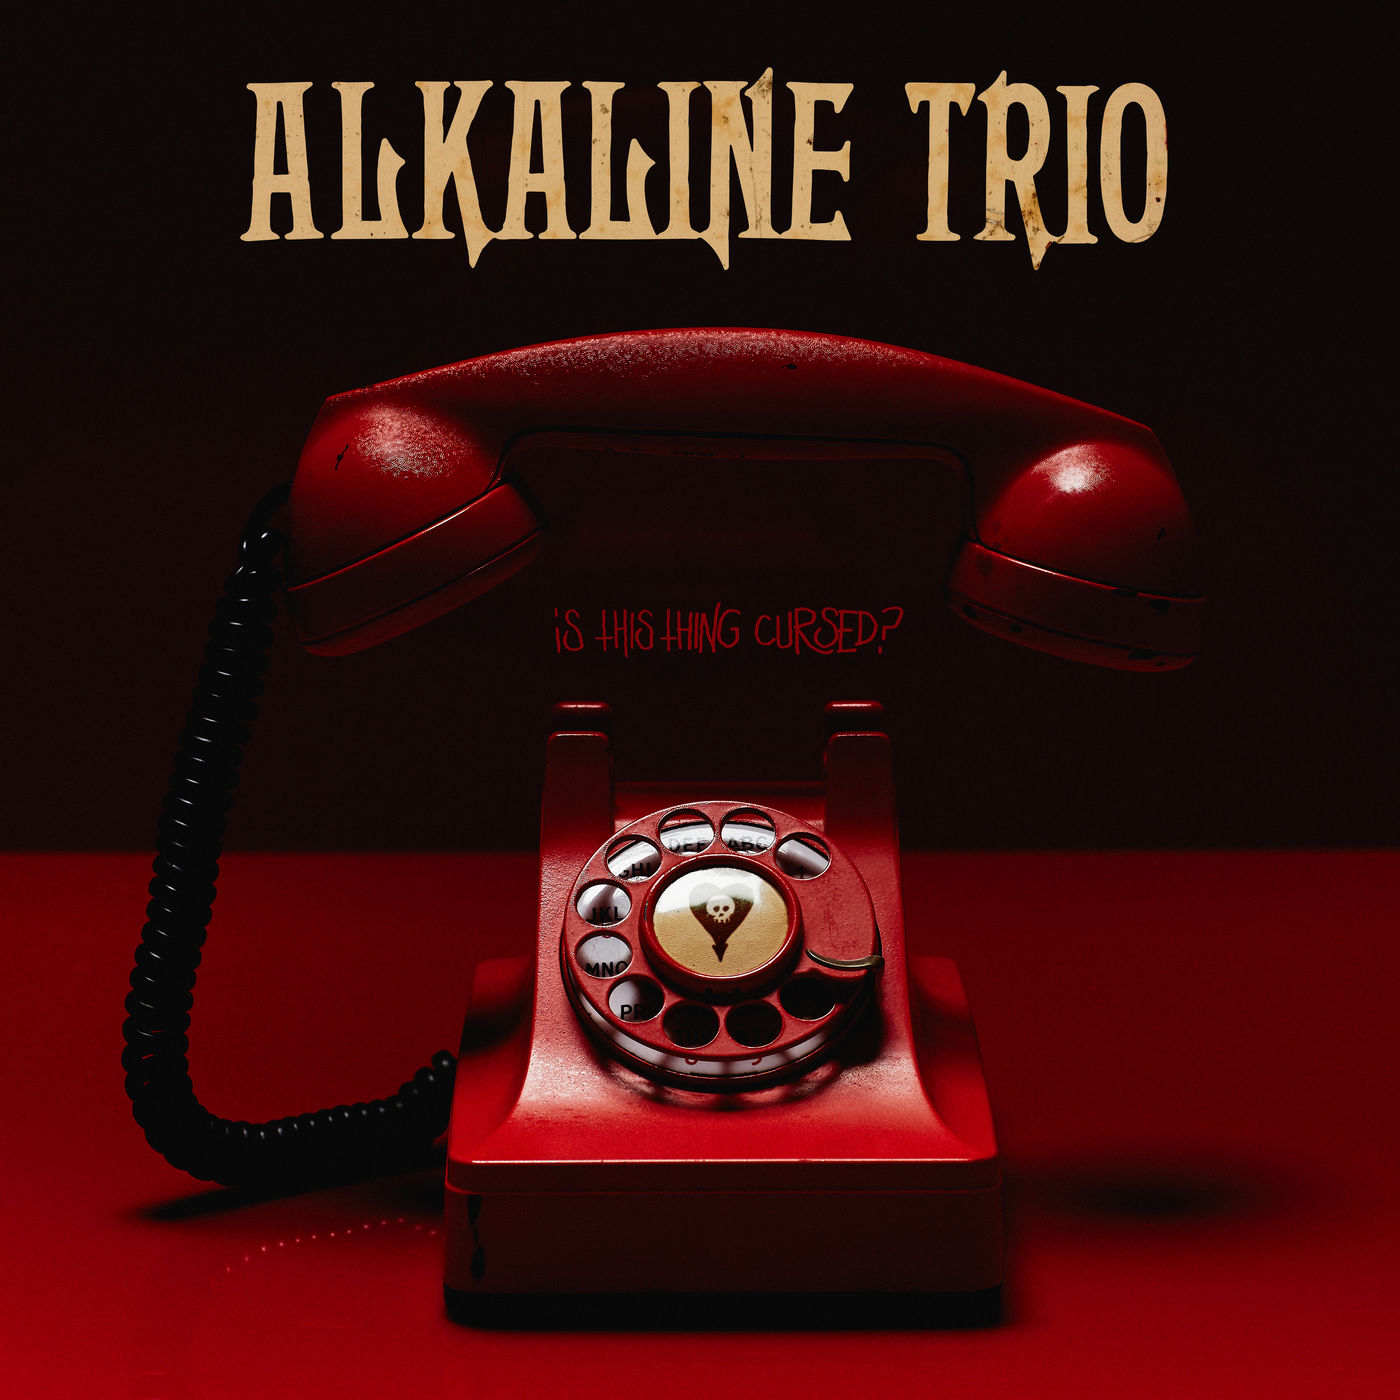 Alkaline Trio - Is This Thing Cursed? (2018) Album Info